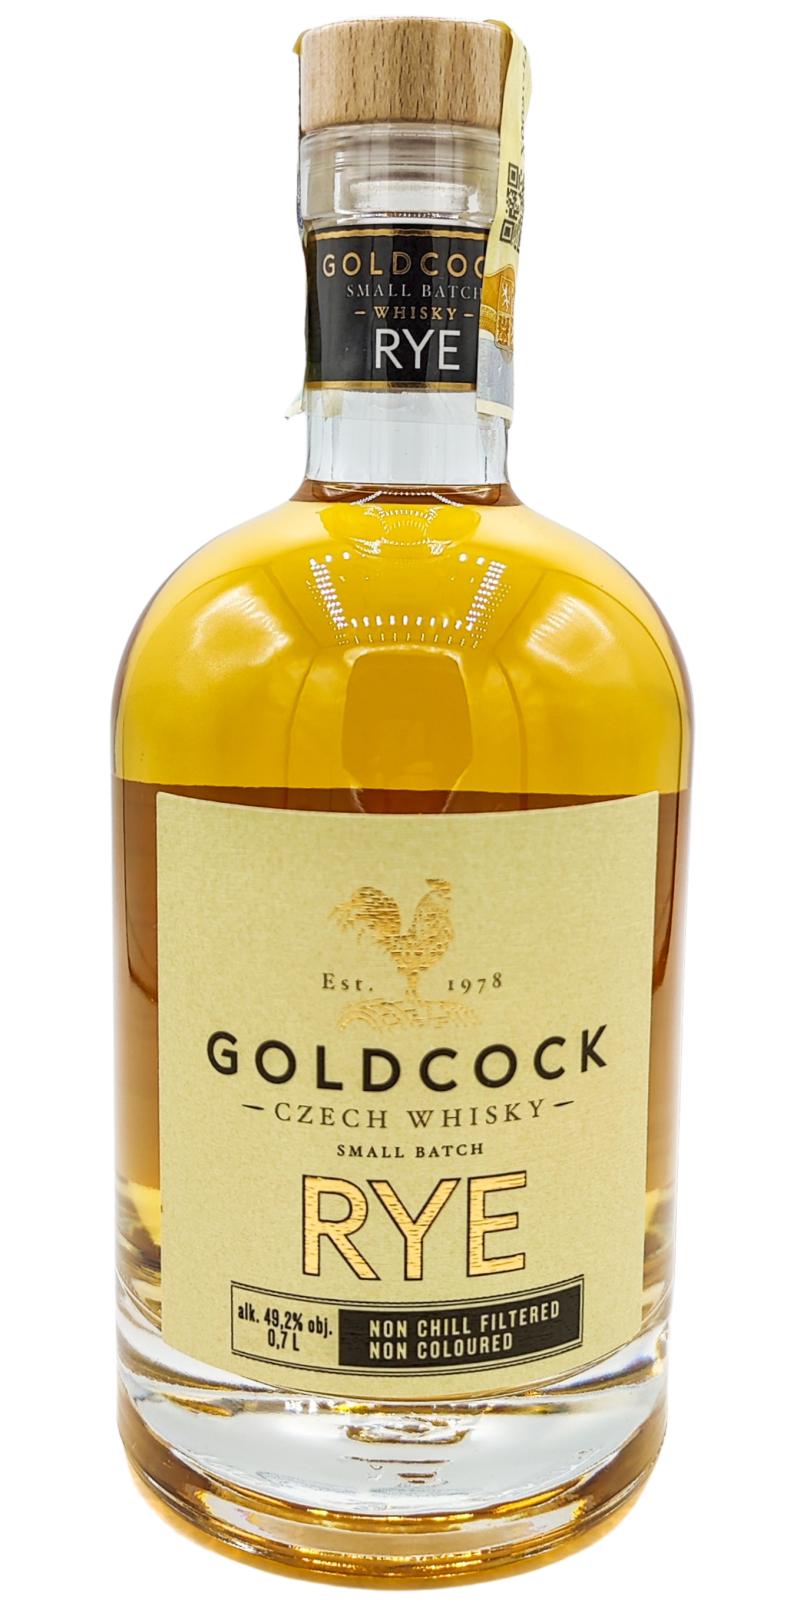 Gold cock. Golden cock.